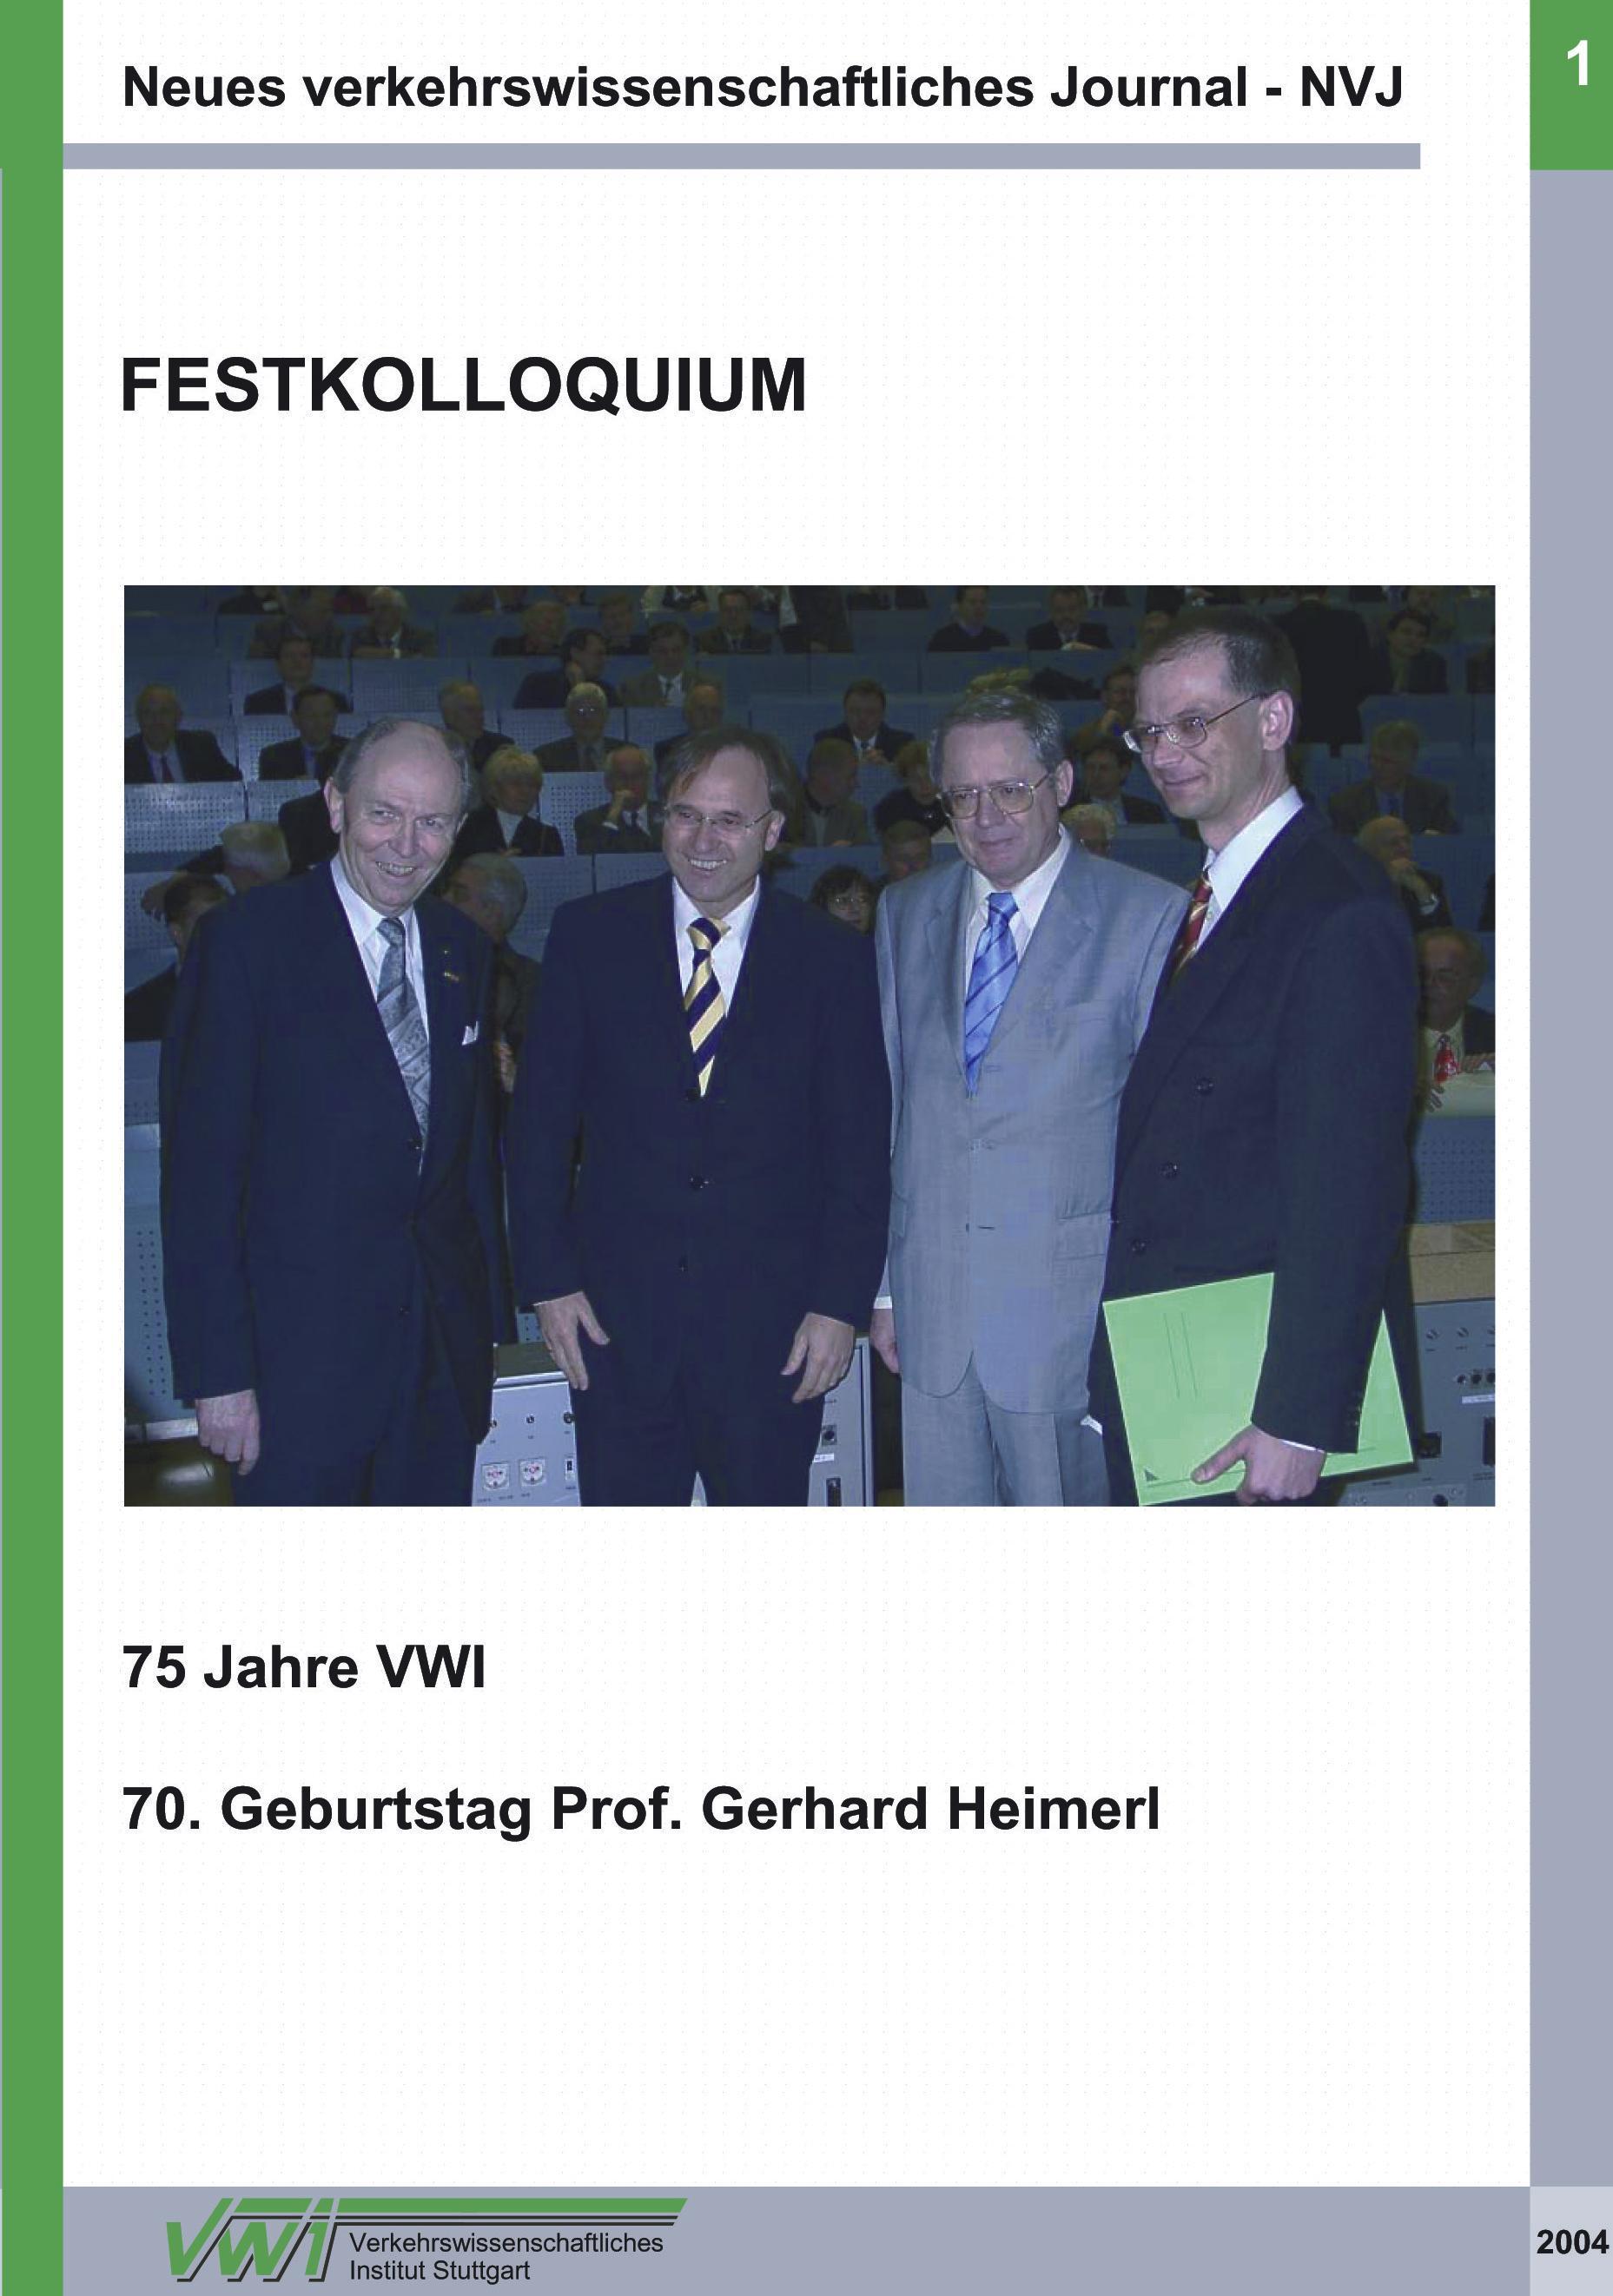 Neues verkehrswissenschaftliches Journal NVJ - Ausgabe 1 - Martin, Ullrich|Birn, Helmut|MÃ¼ller, Ulrich|Fritsch, Dieter|Stiefer, Thomas